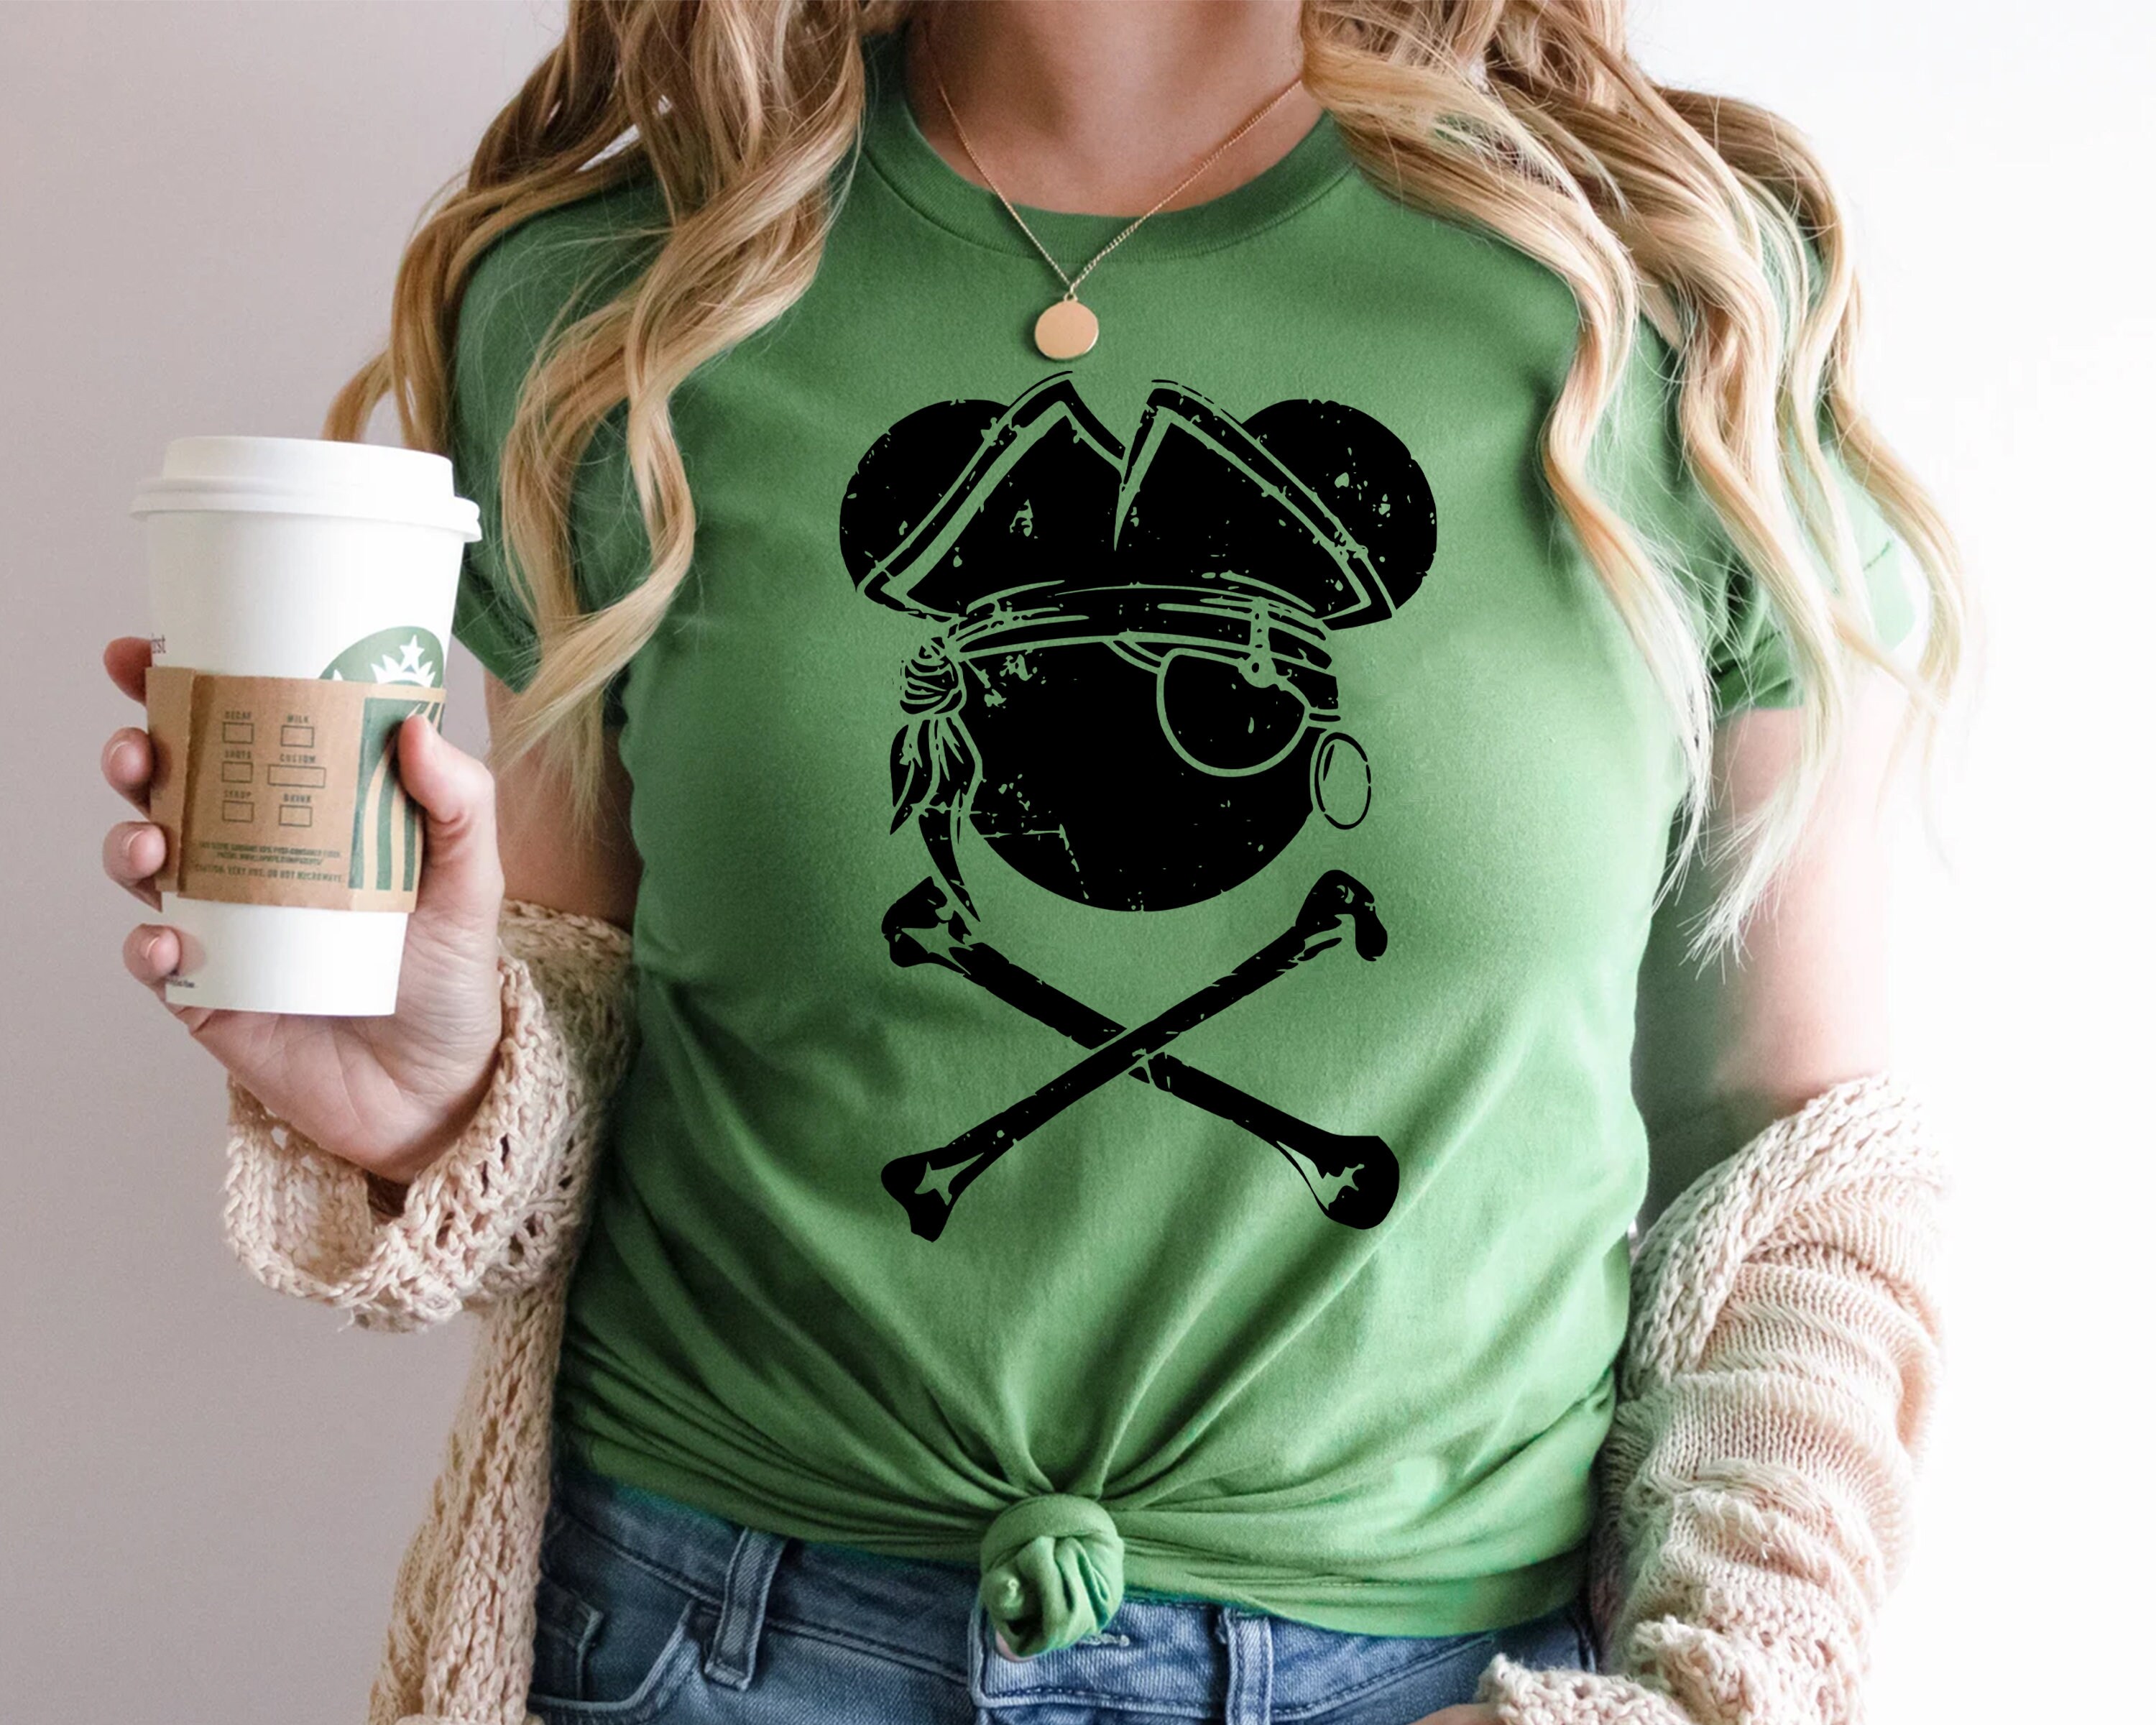 Discover Mickey Pirate Shirt, Pirate Shirt, Pirates of Caribbean Shirts For Men Women Kids